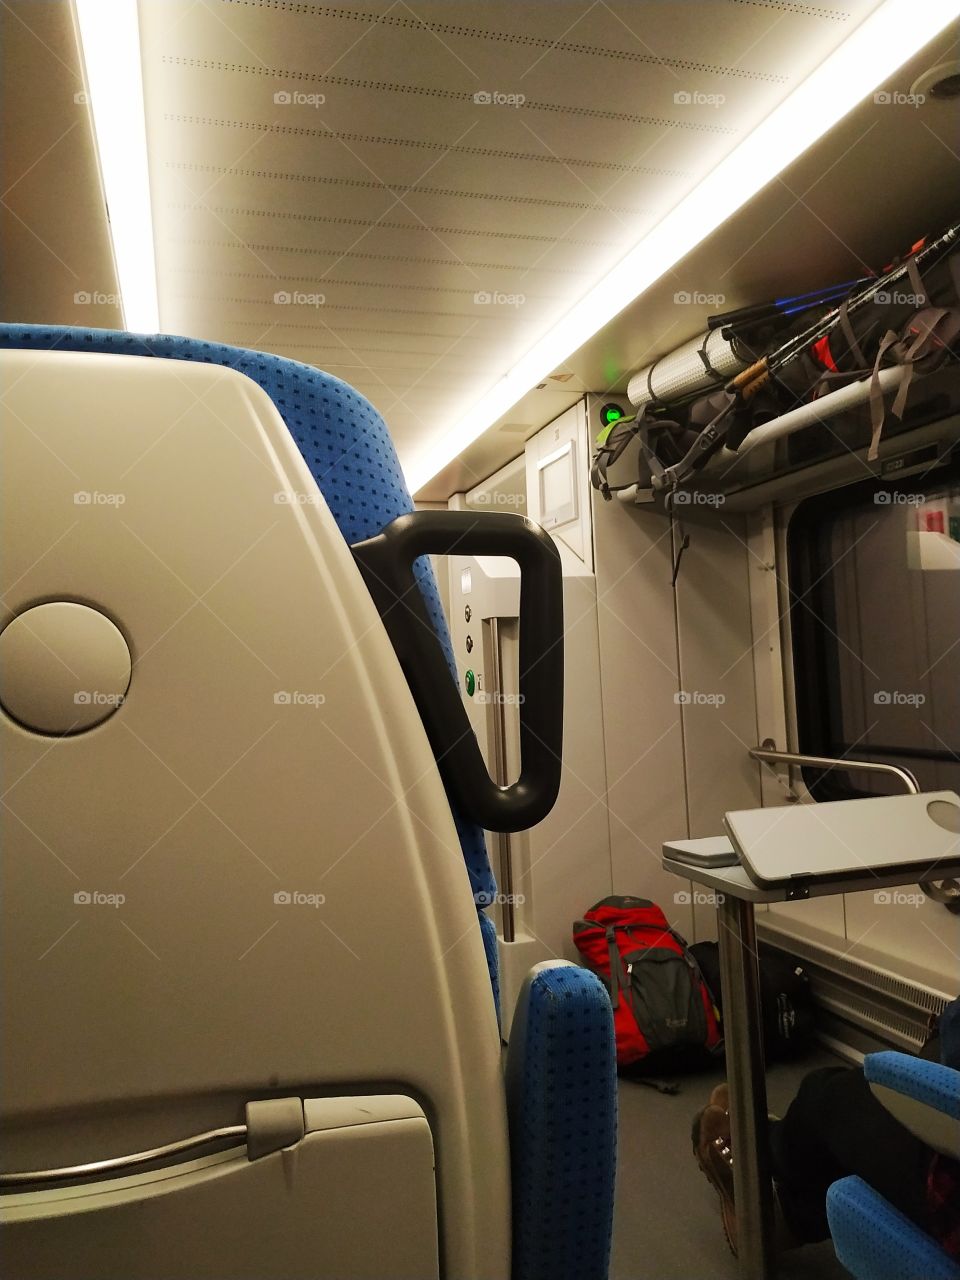 Bright interior of a modern train. Climbing equipment on a shelf.